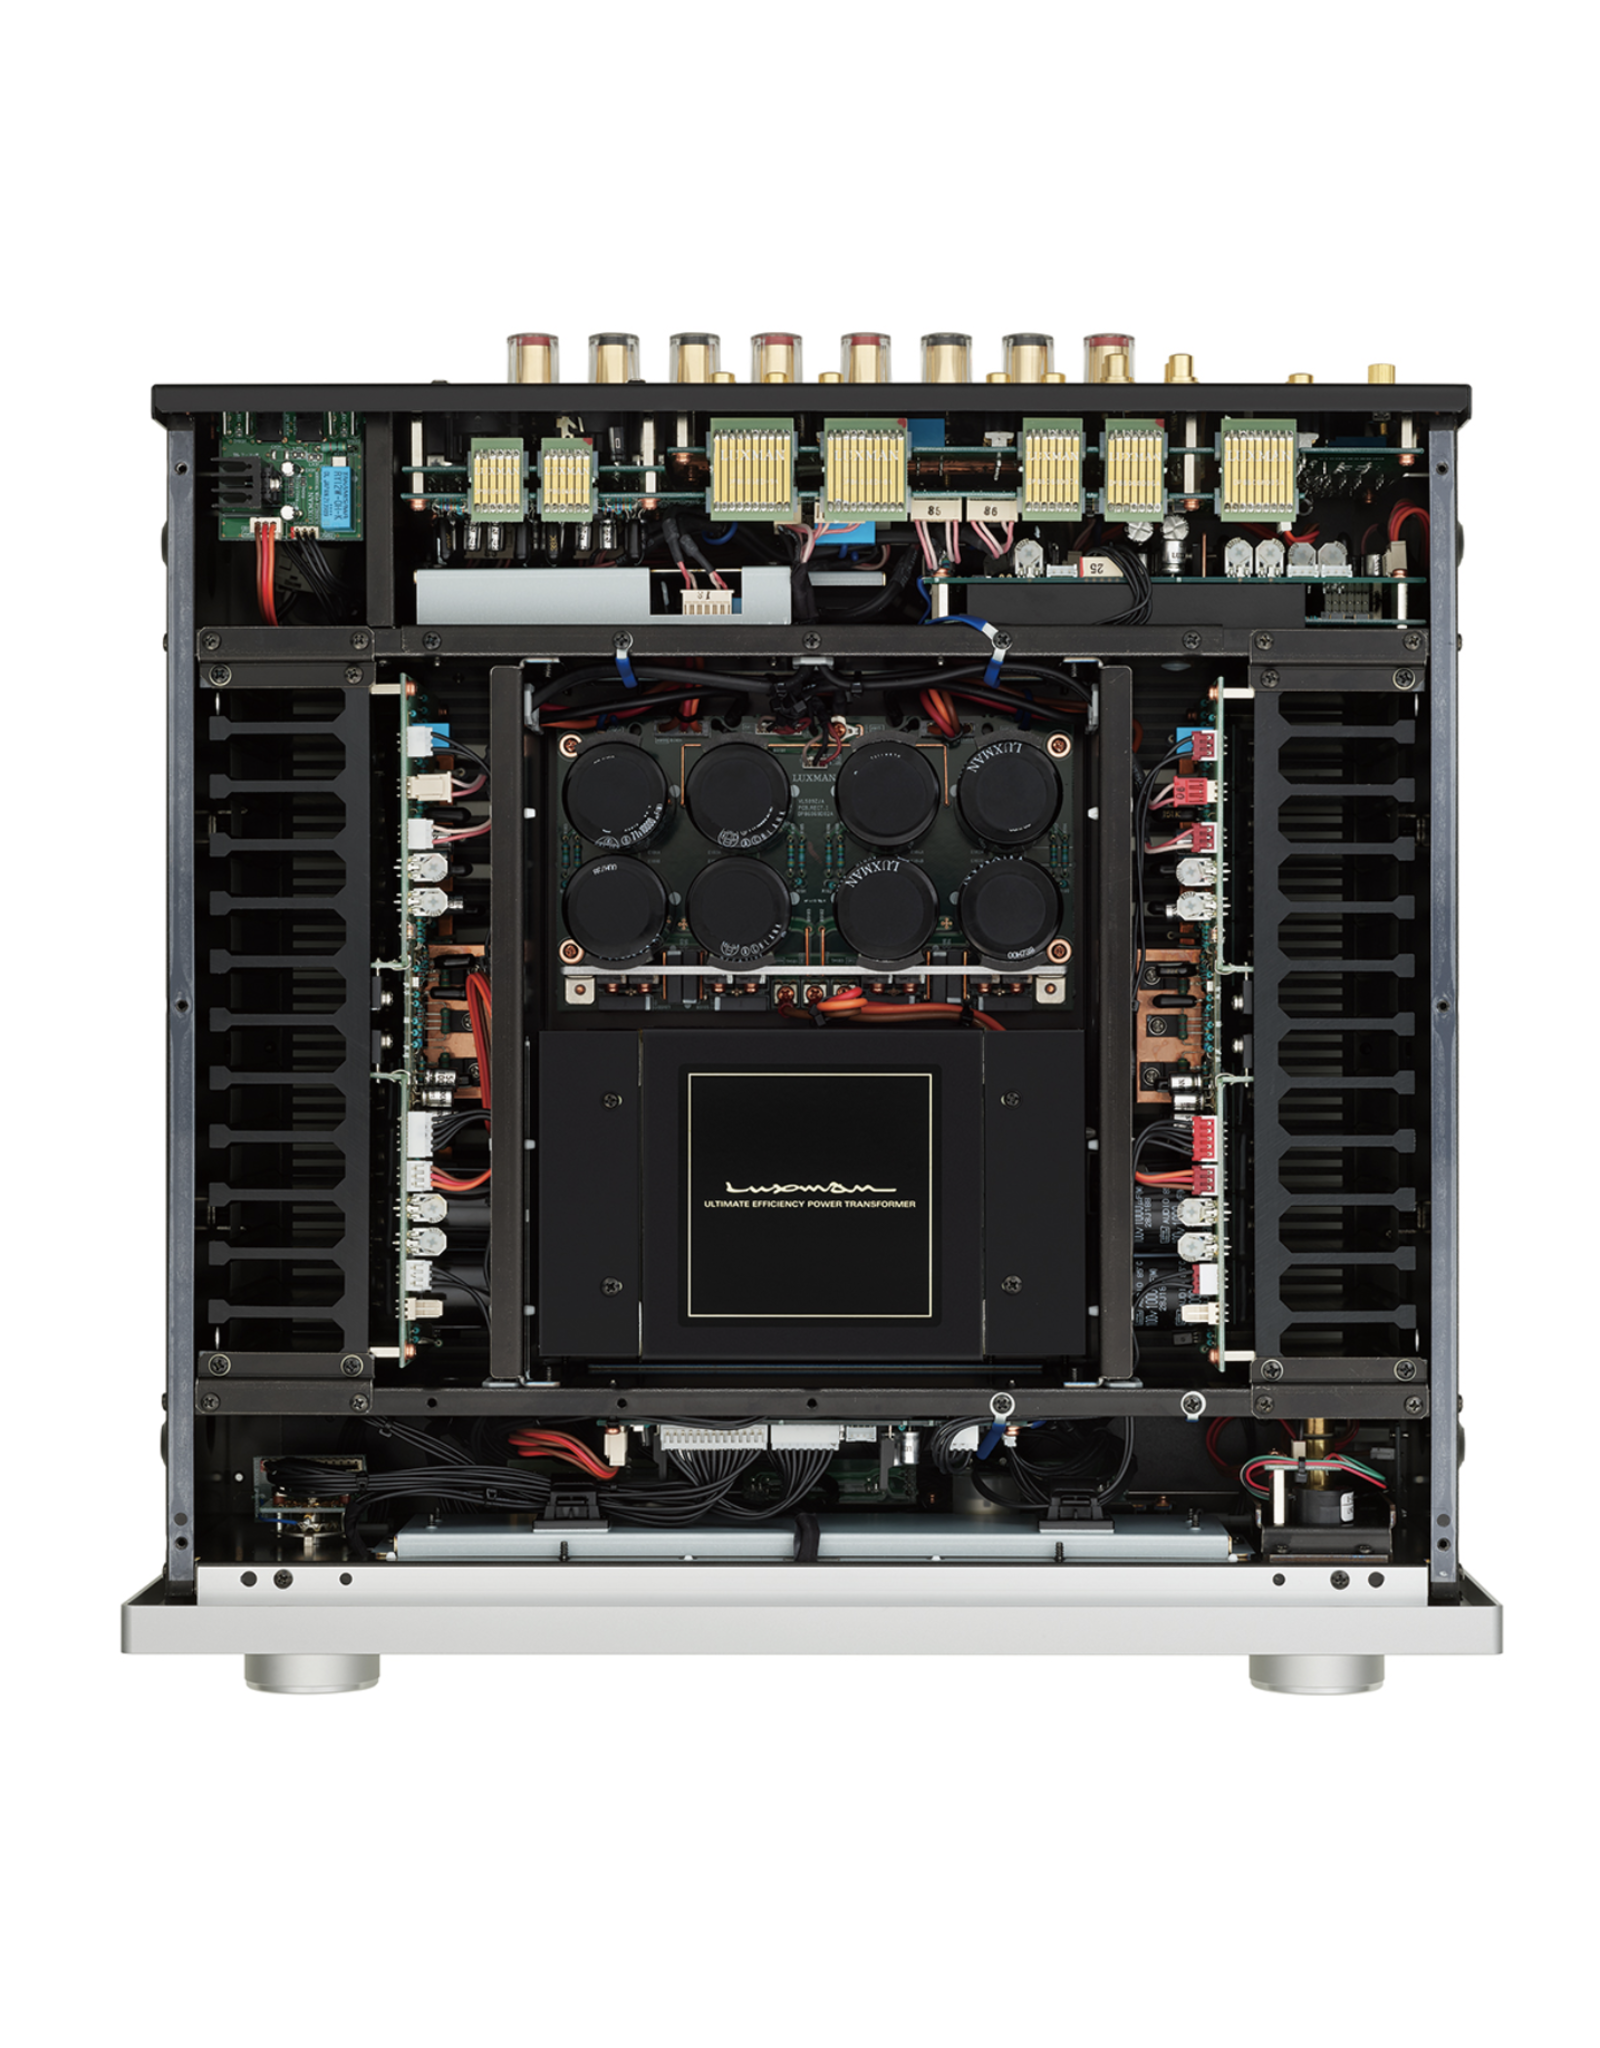 Luxman Luxman L-509Z Class AB Integrated Amplifier